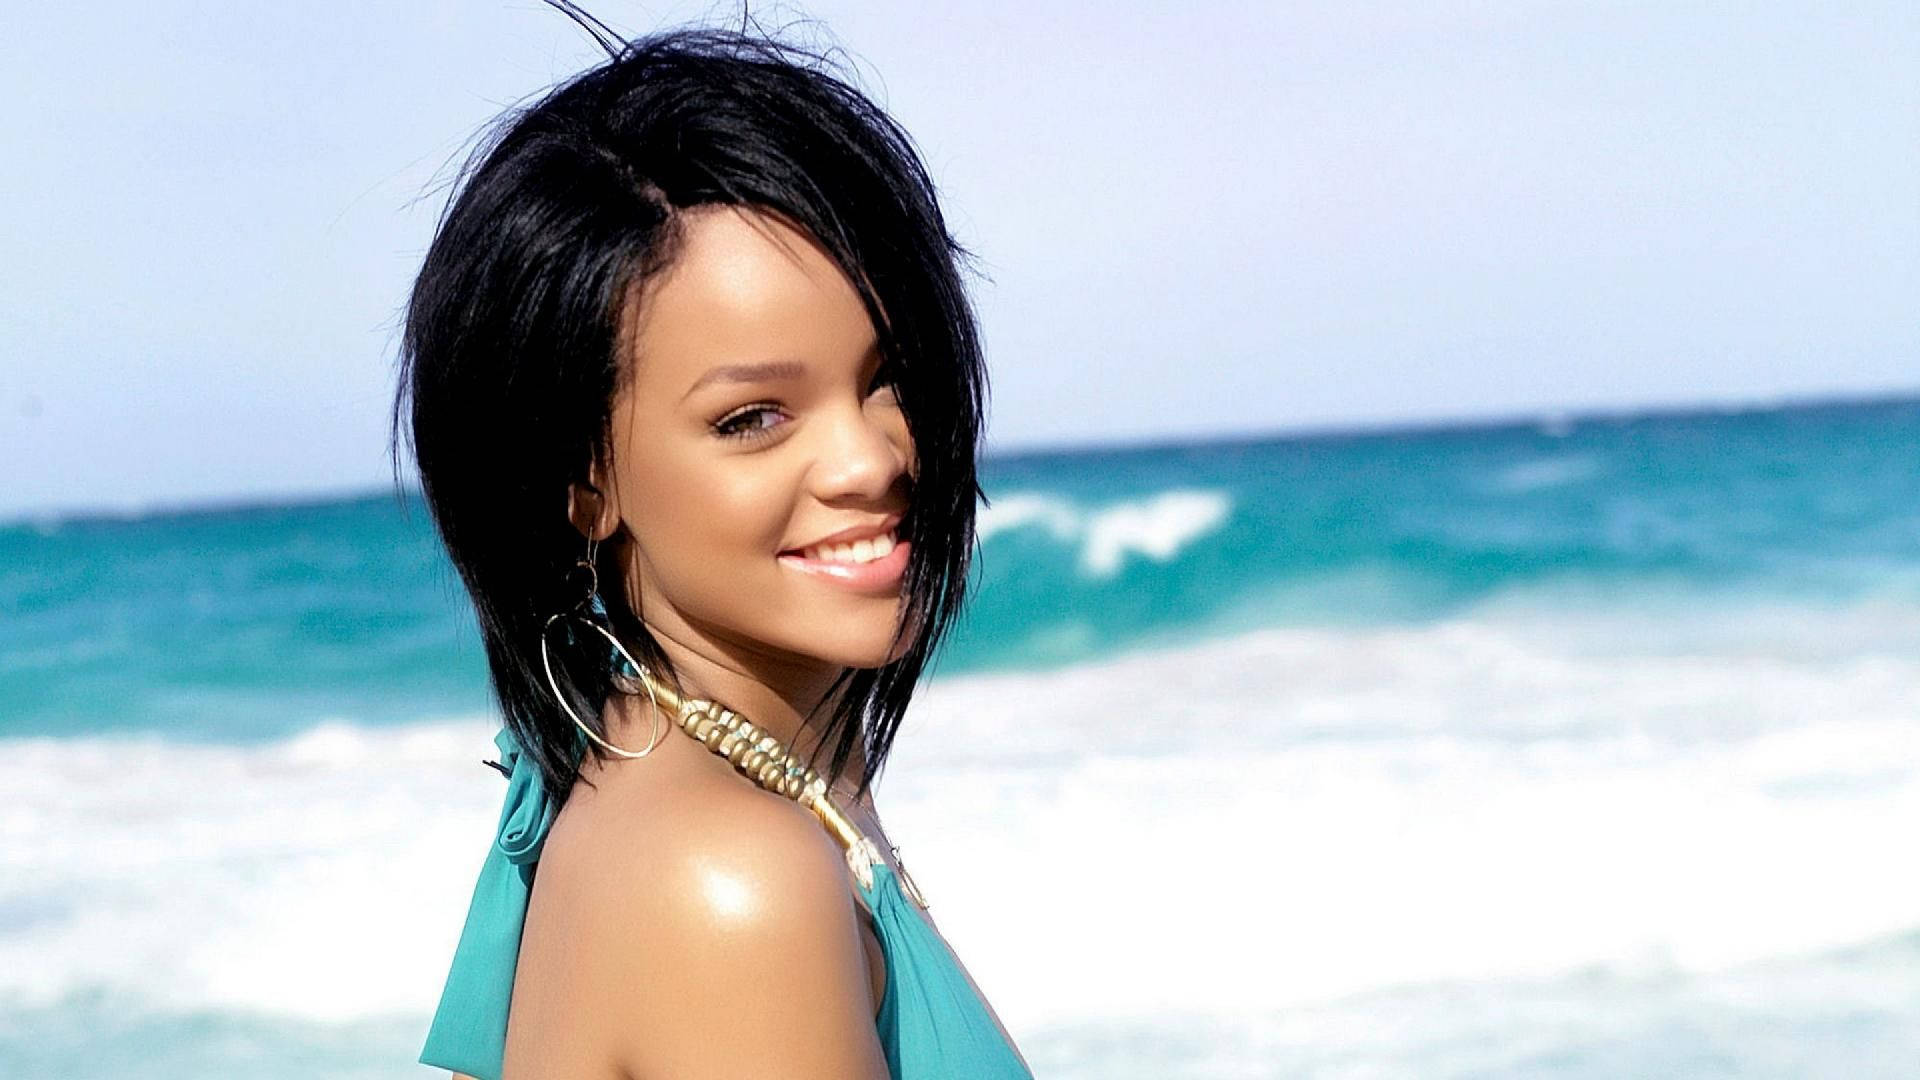 Rihanna Beach Photo Shoot Background